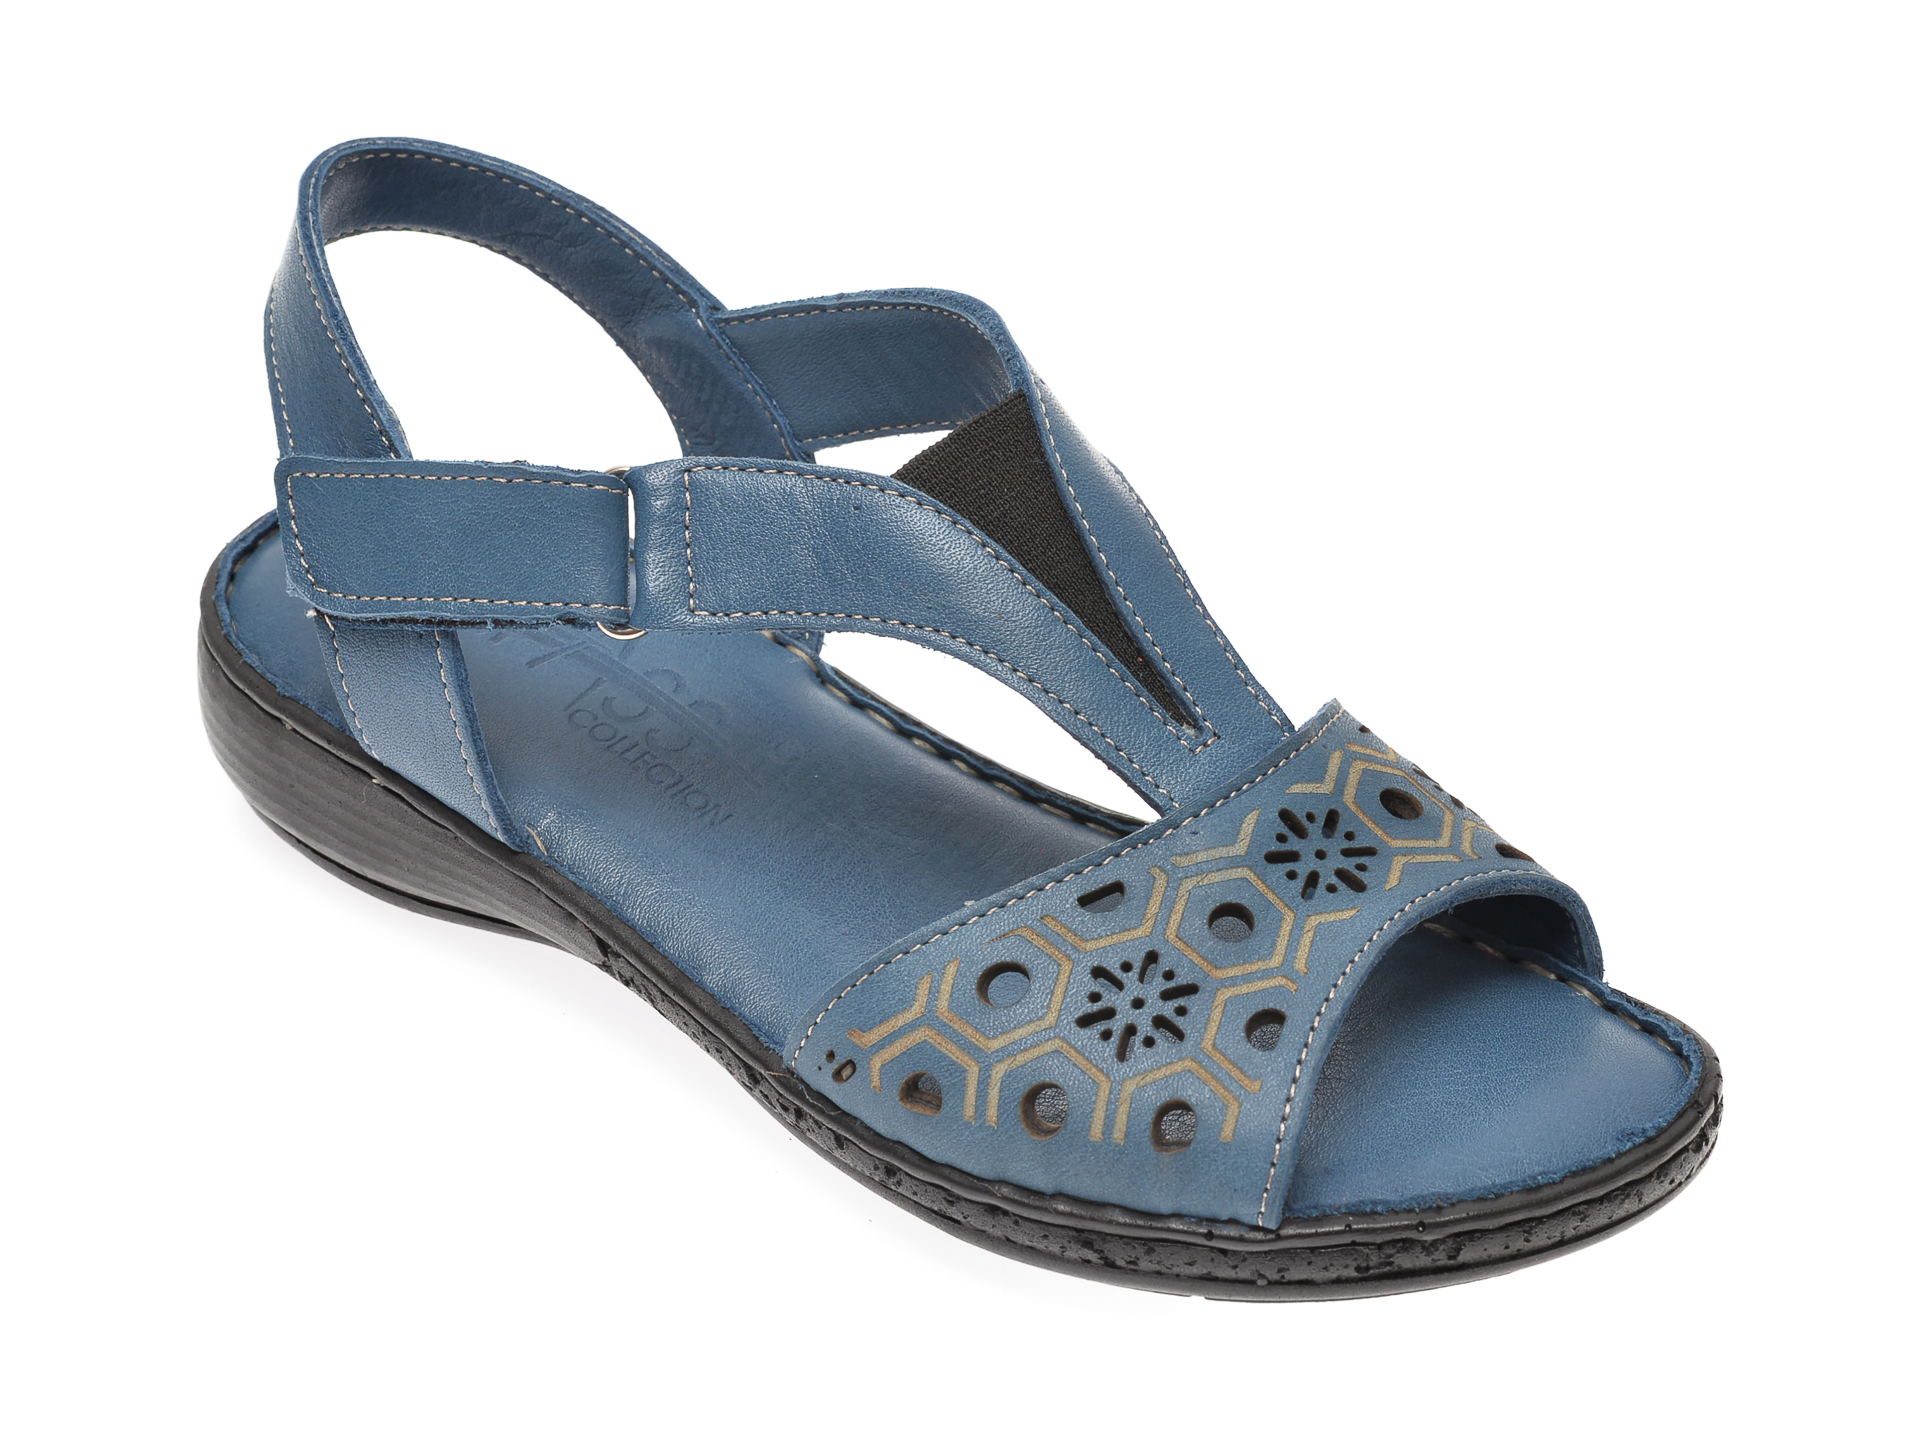 Sandale PASS COLLECTION albastre, 435, din piele naturala